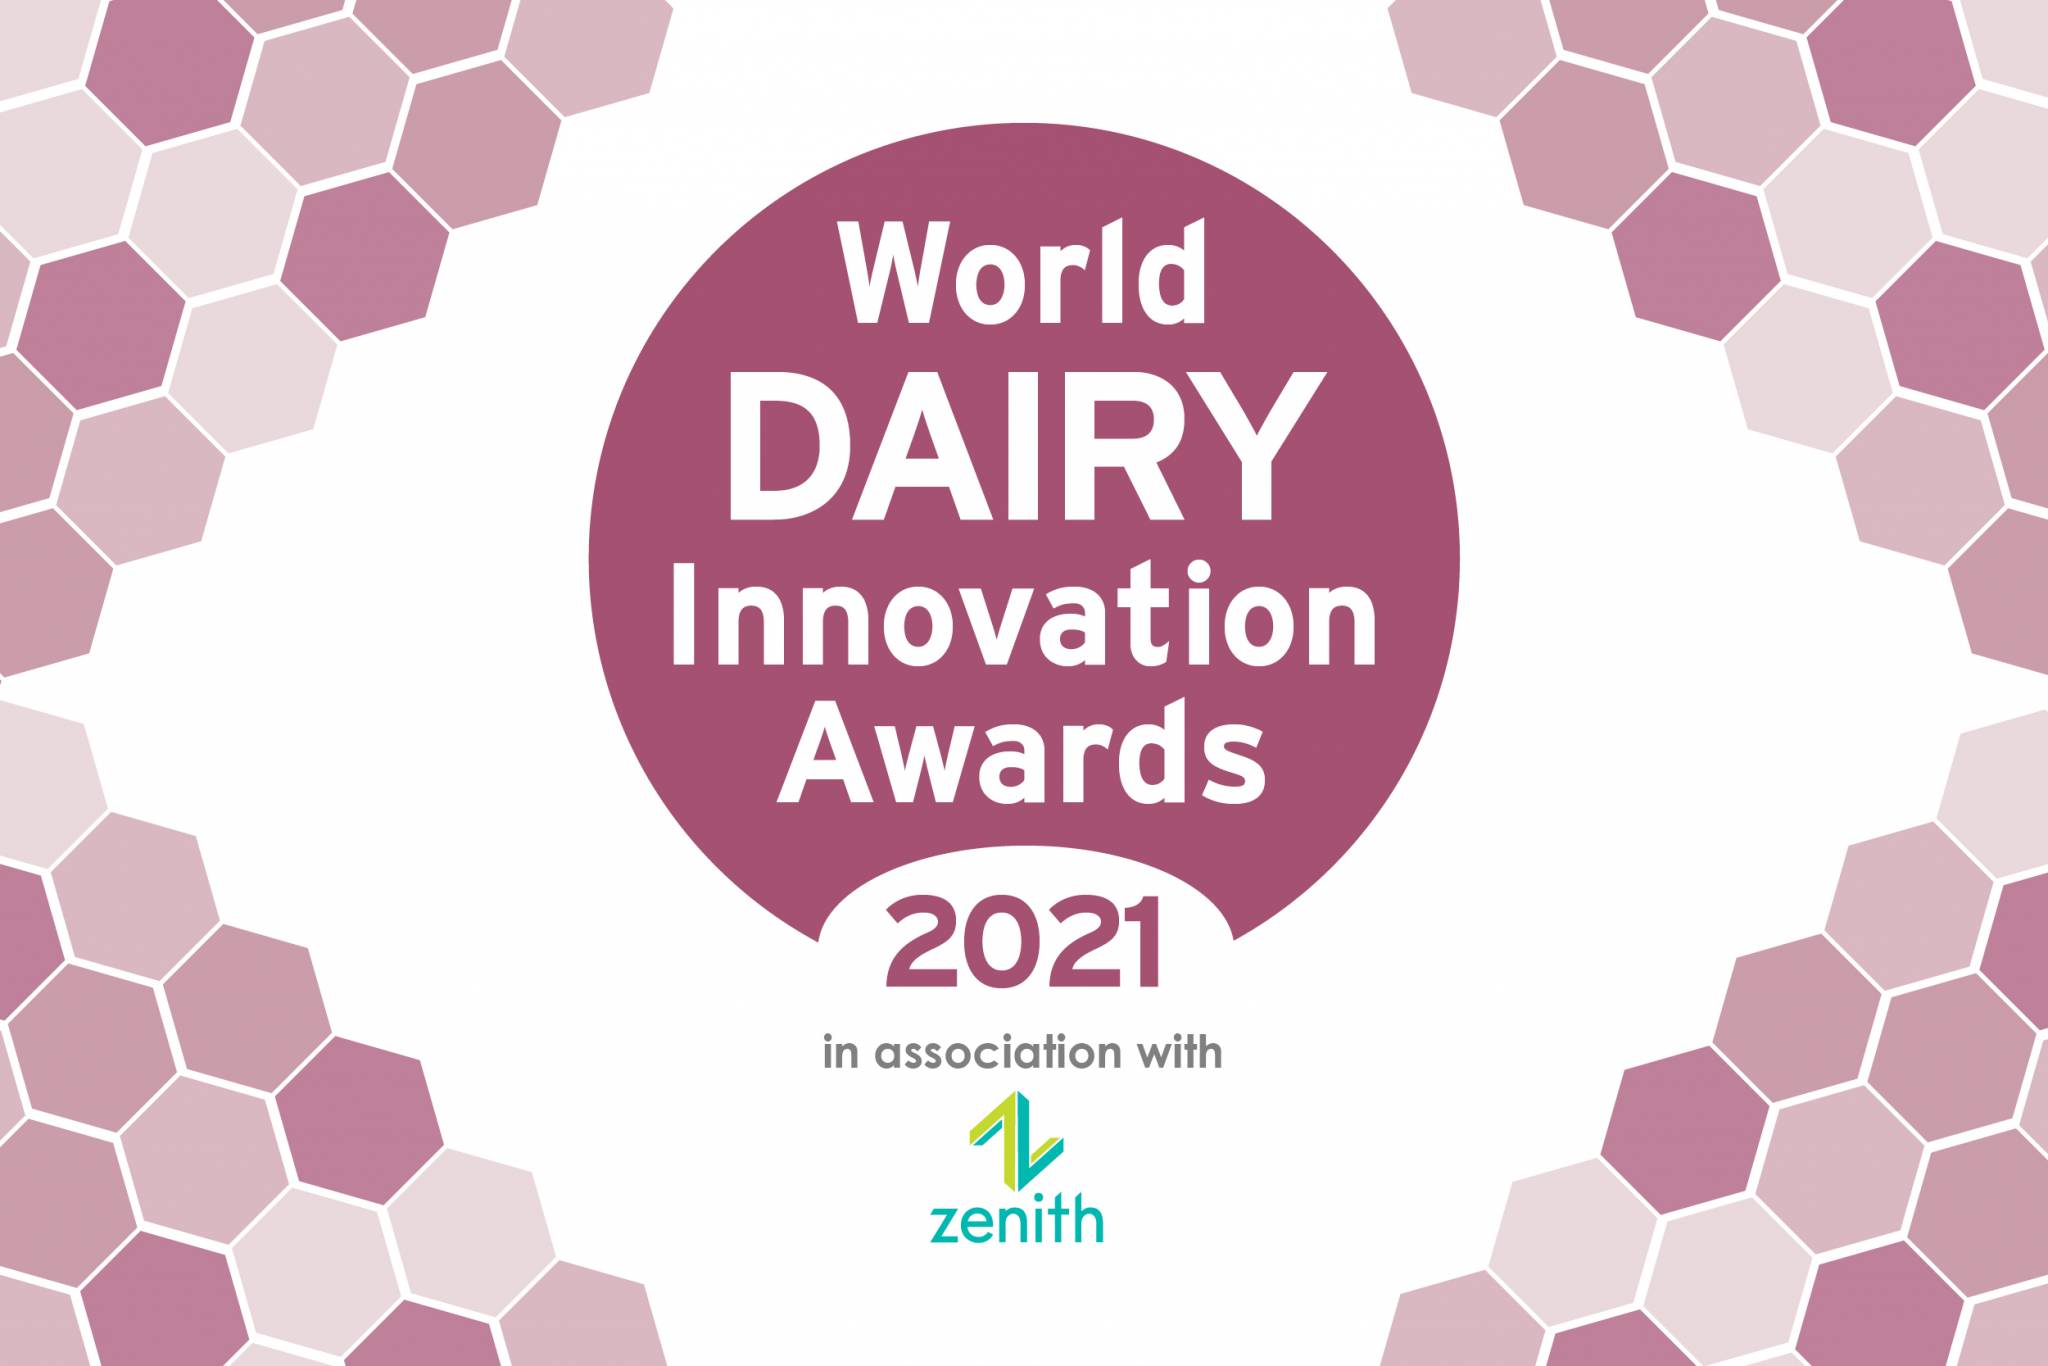 World Dairy Innovation Awards 2021: Winners revealed